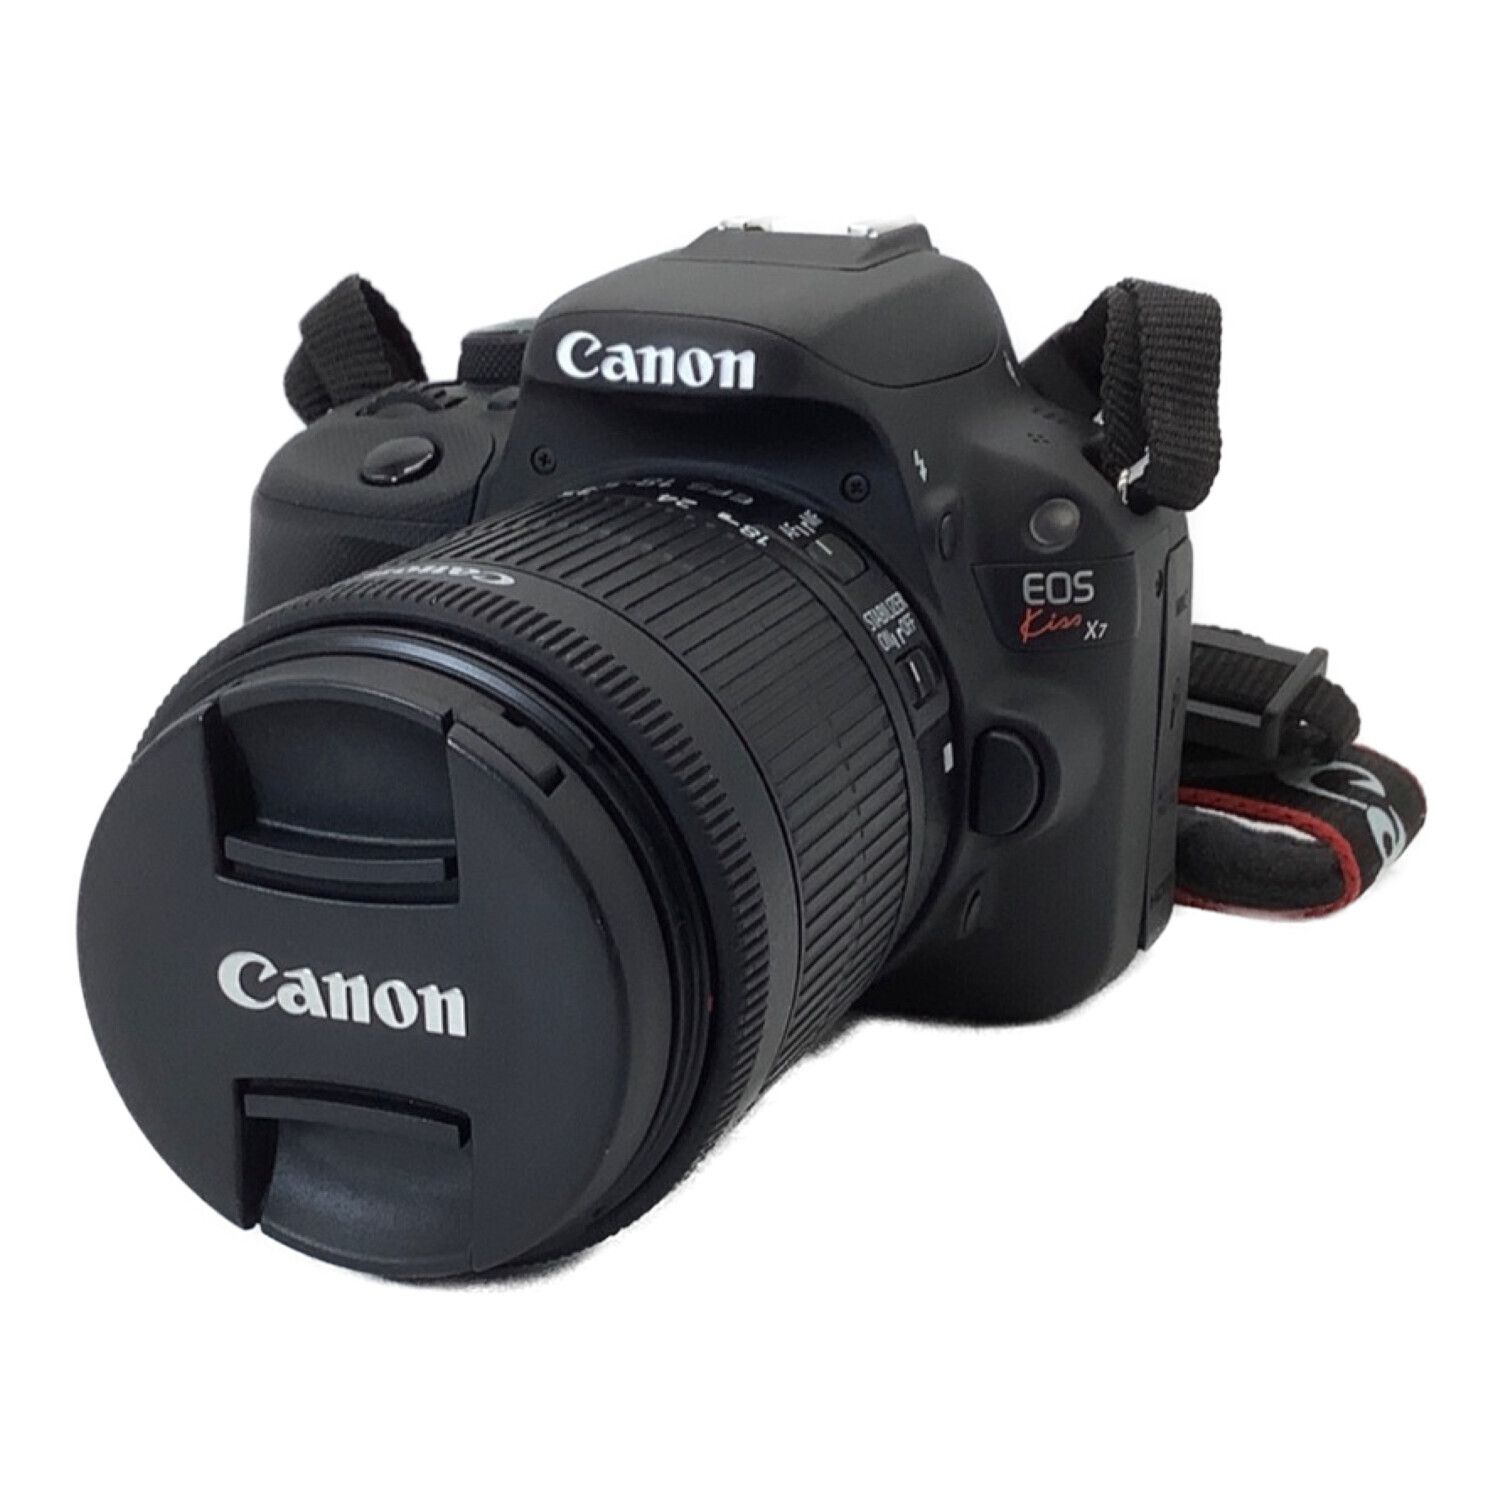 CANON (キャノン) デジタル一眼レフカメラ DS126441 EOS KISS X7 1800 